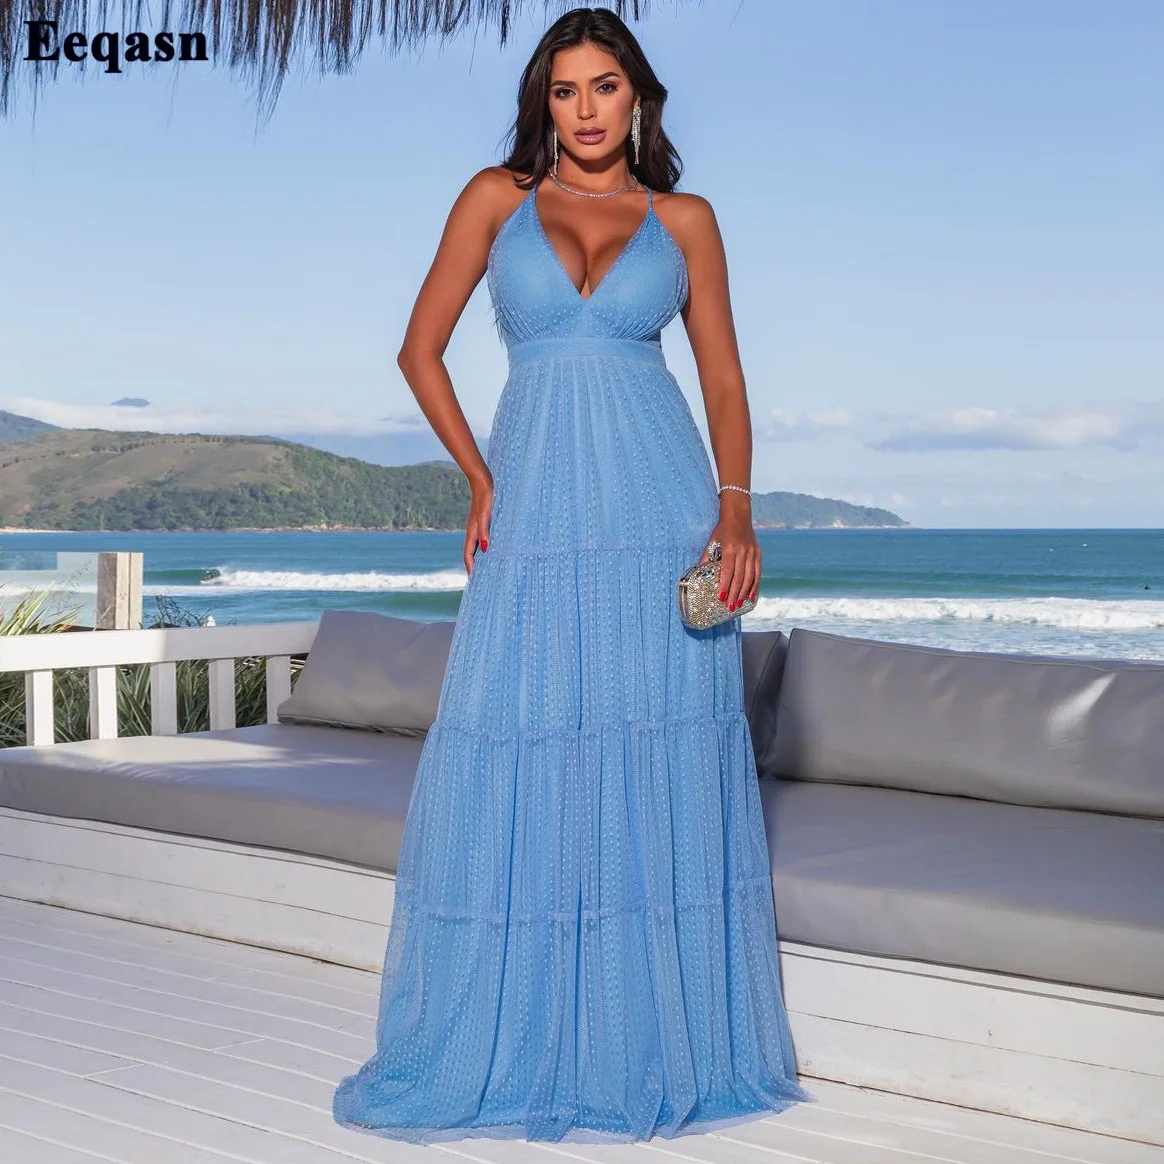 

Eeqasn Sky Blue V-Neck Dots Tulle Dubai Evening Dresses Long Women Formal Prom Gowns Beach Tiered Skirt Celebrity Party Dress